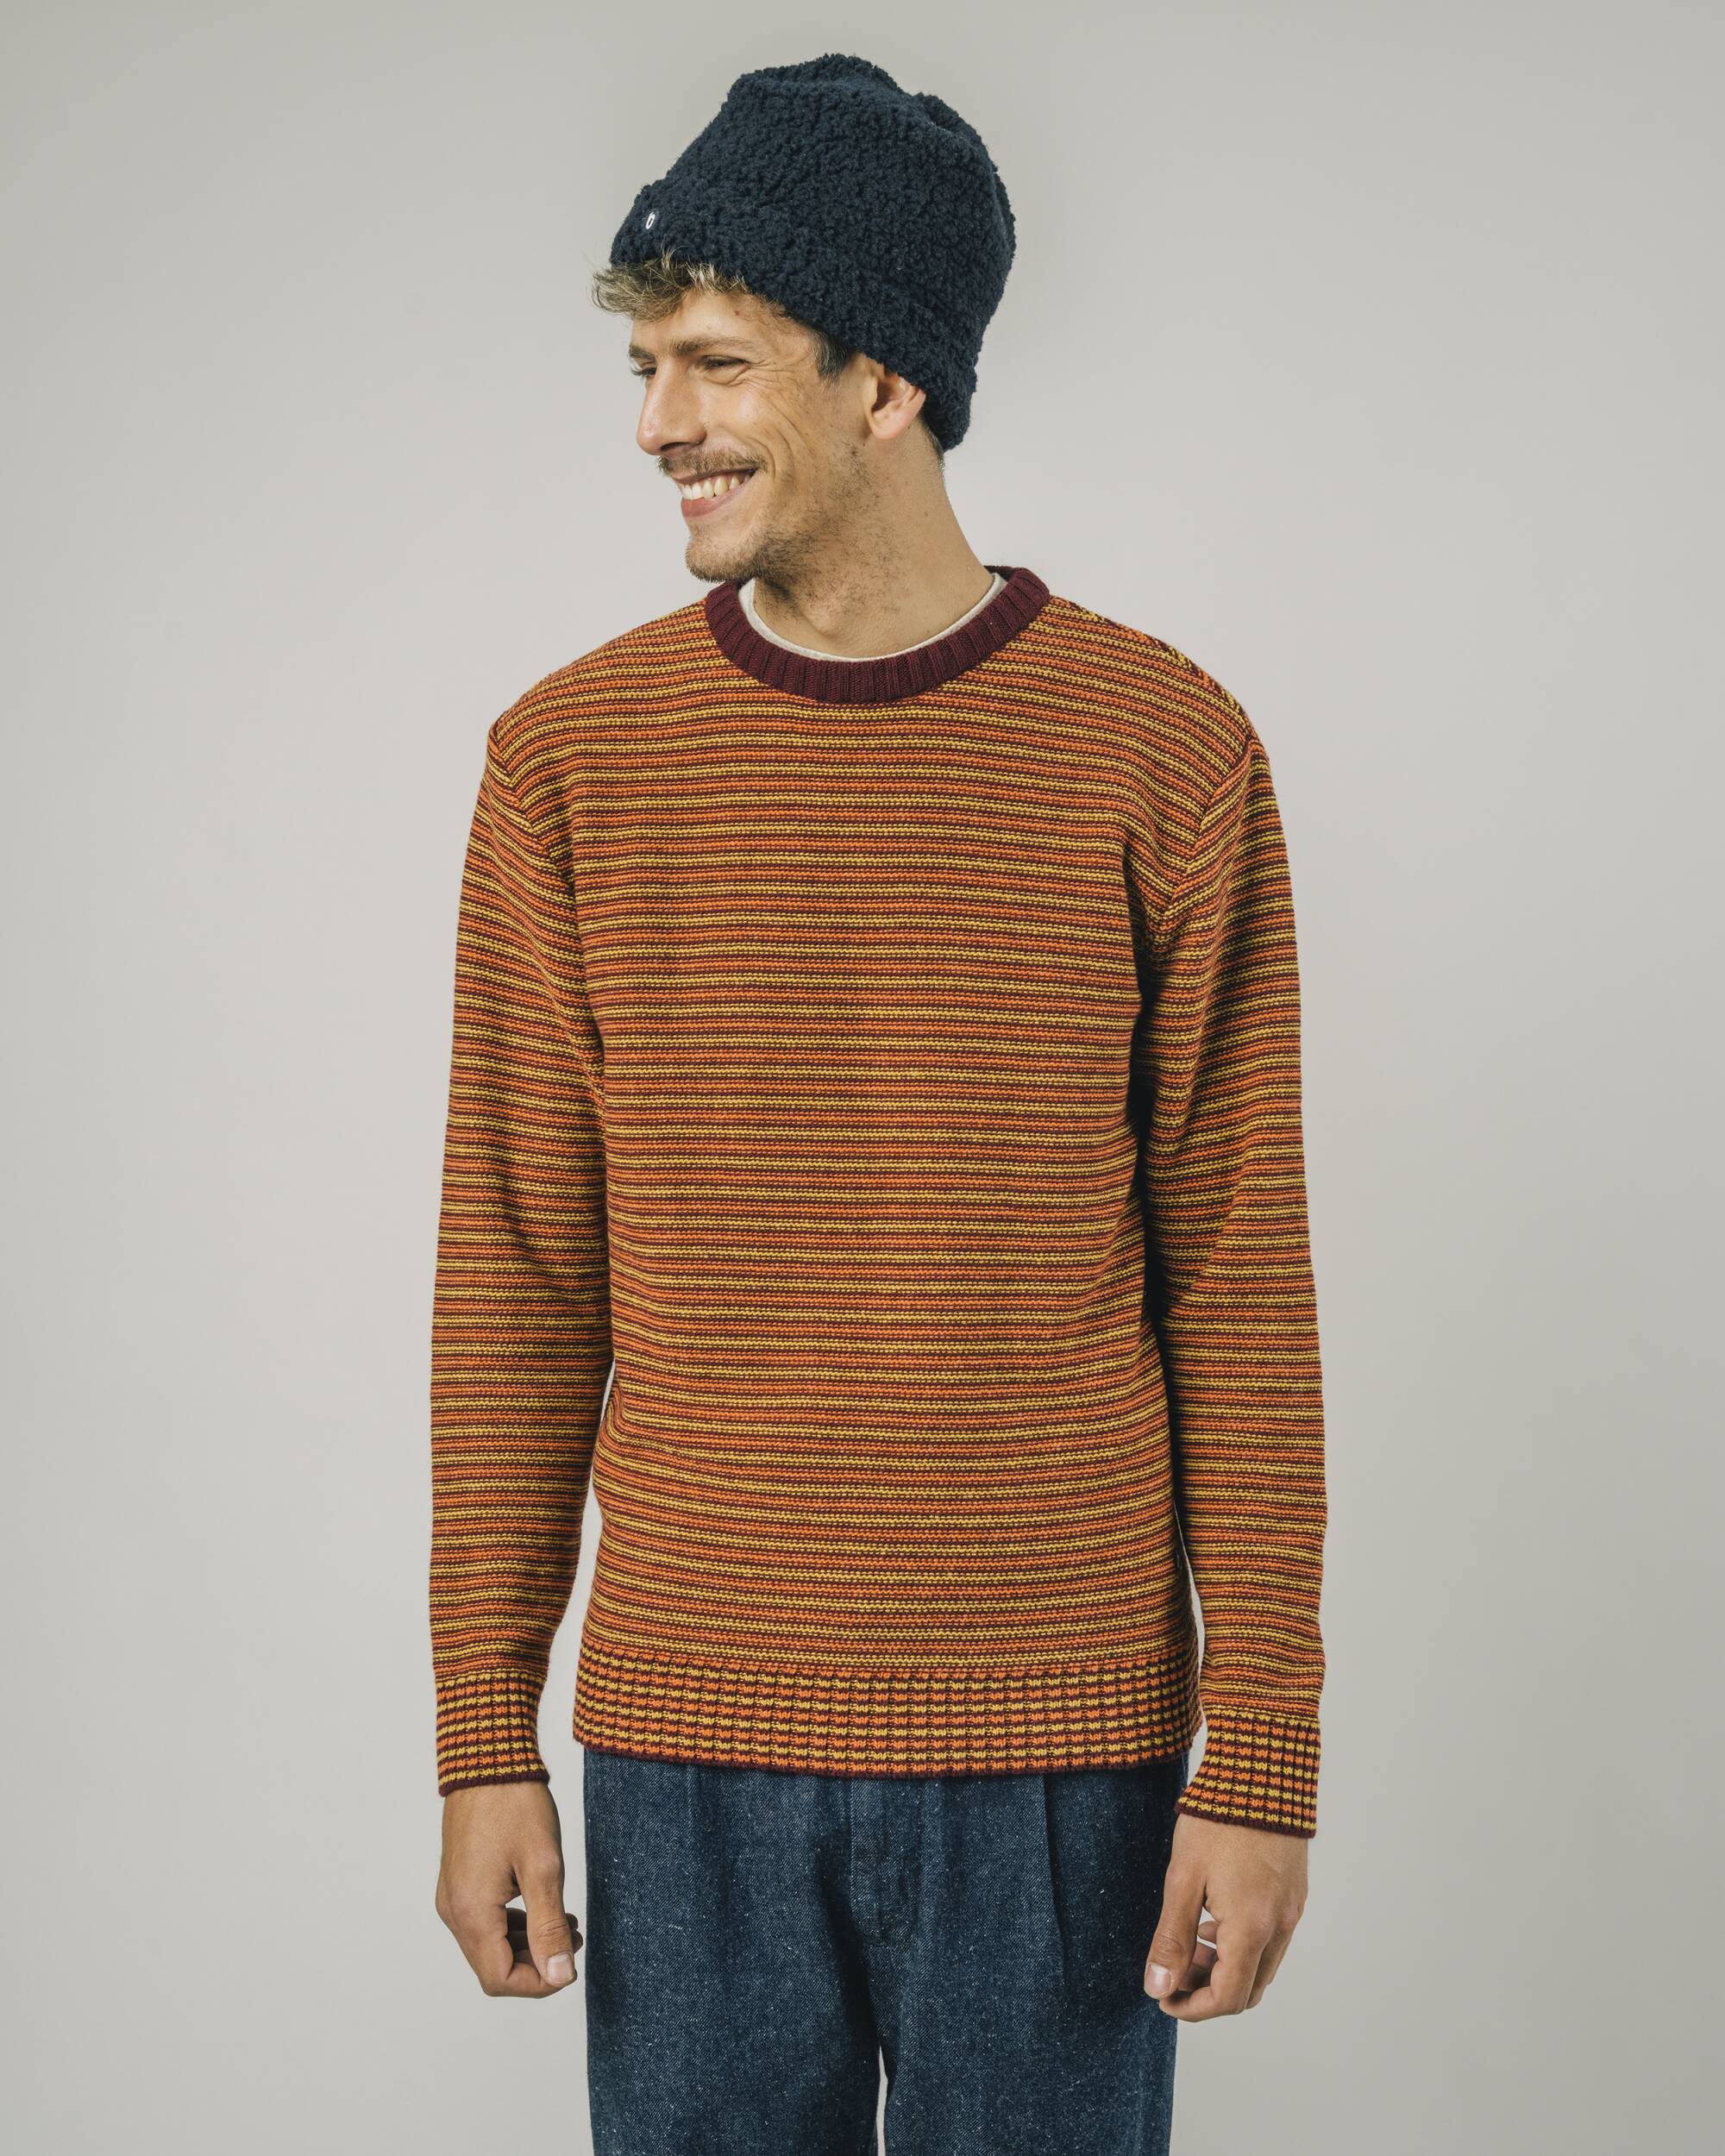 Orange wool and cashmere Stripes sweater from Brava Fabrics